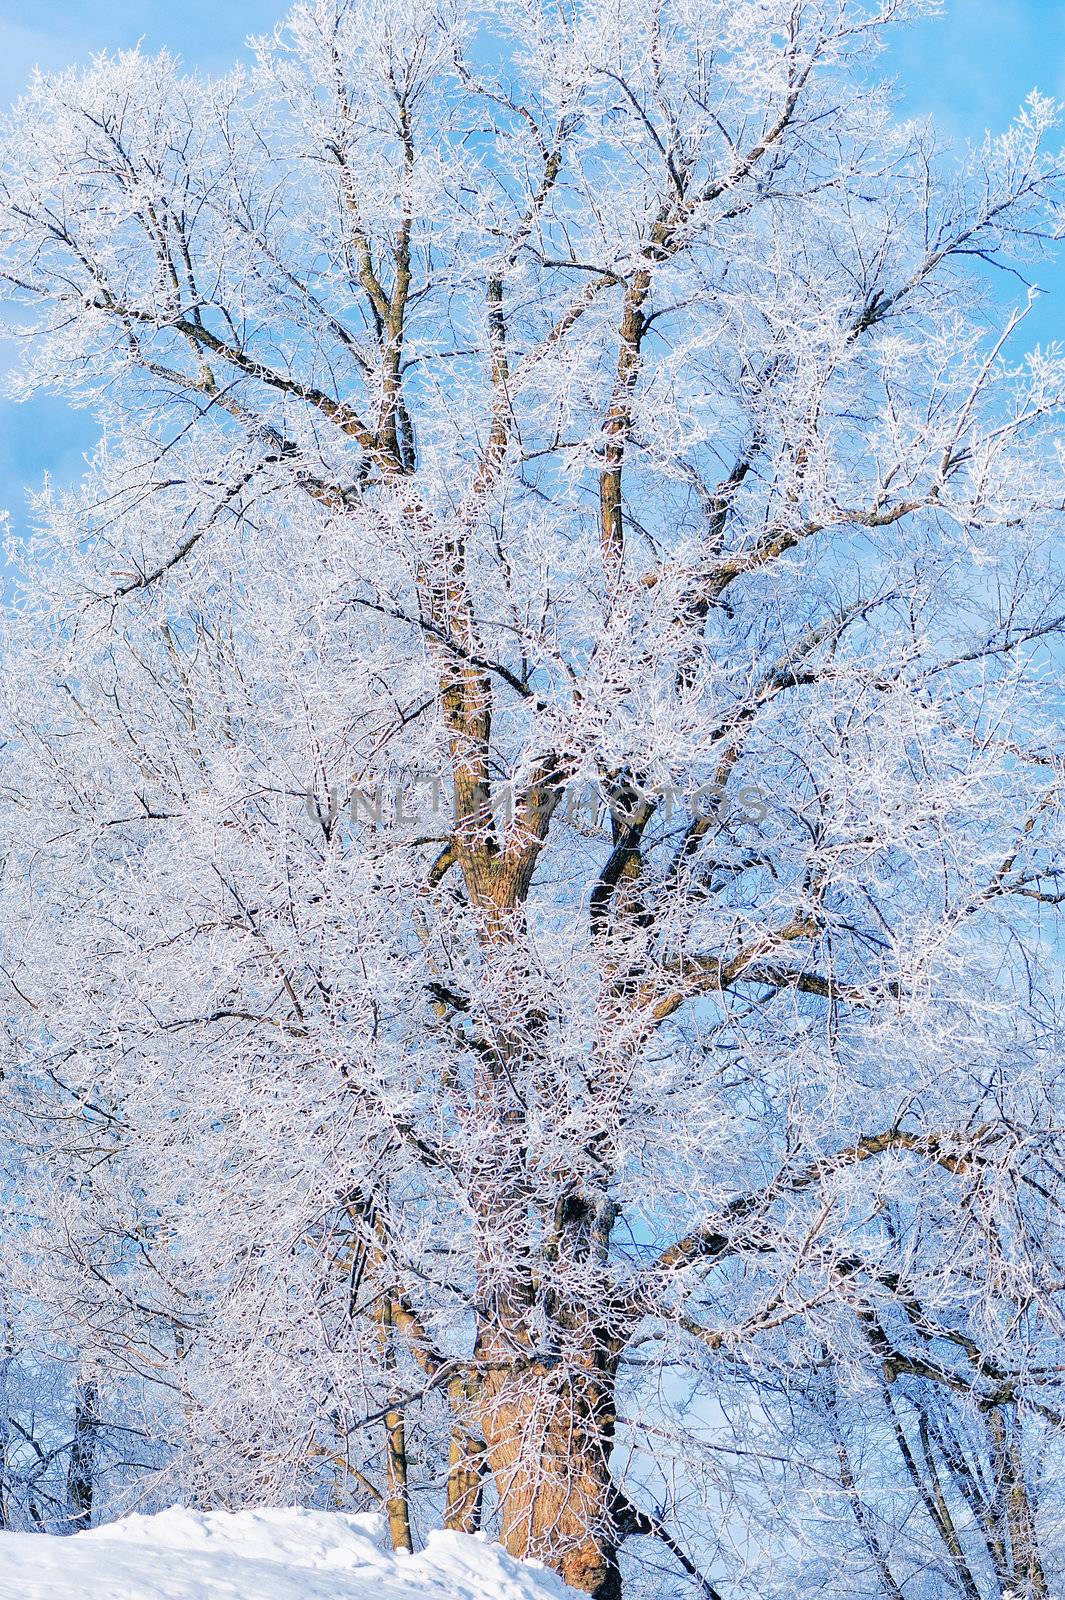 Snowy Tree by styf22